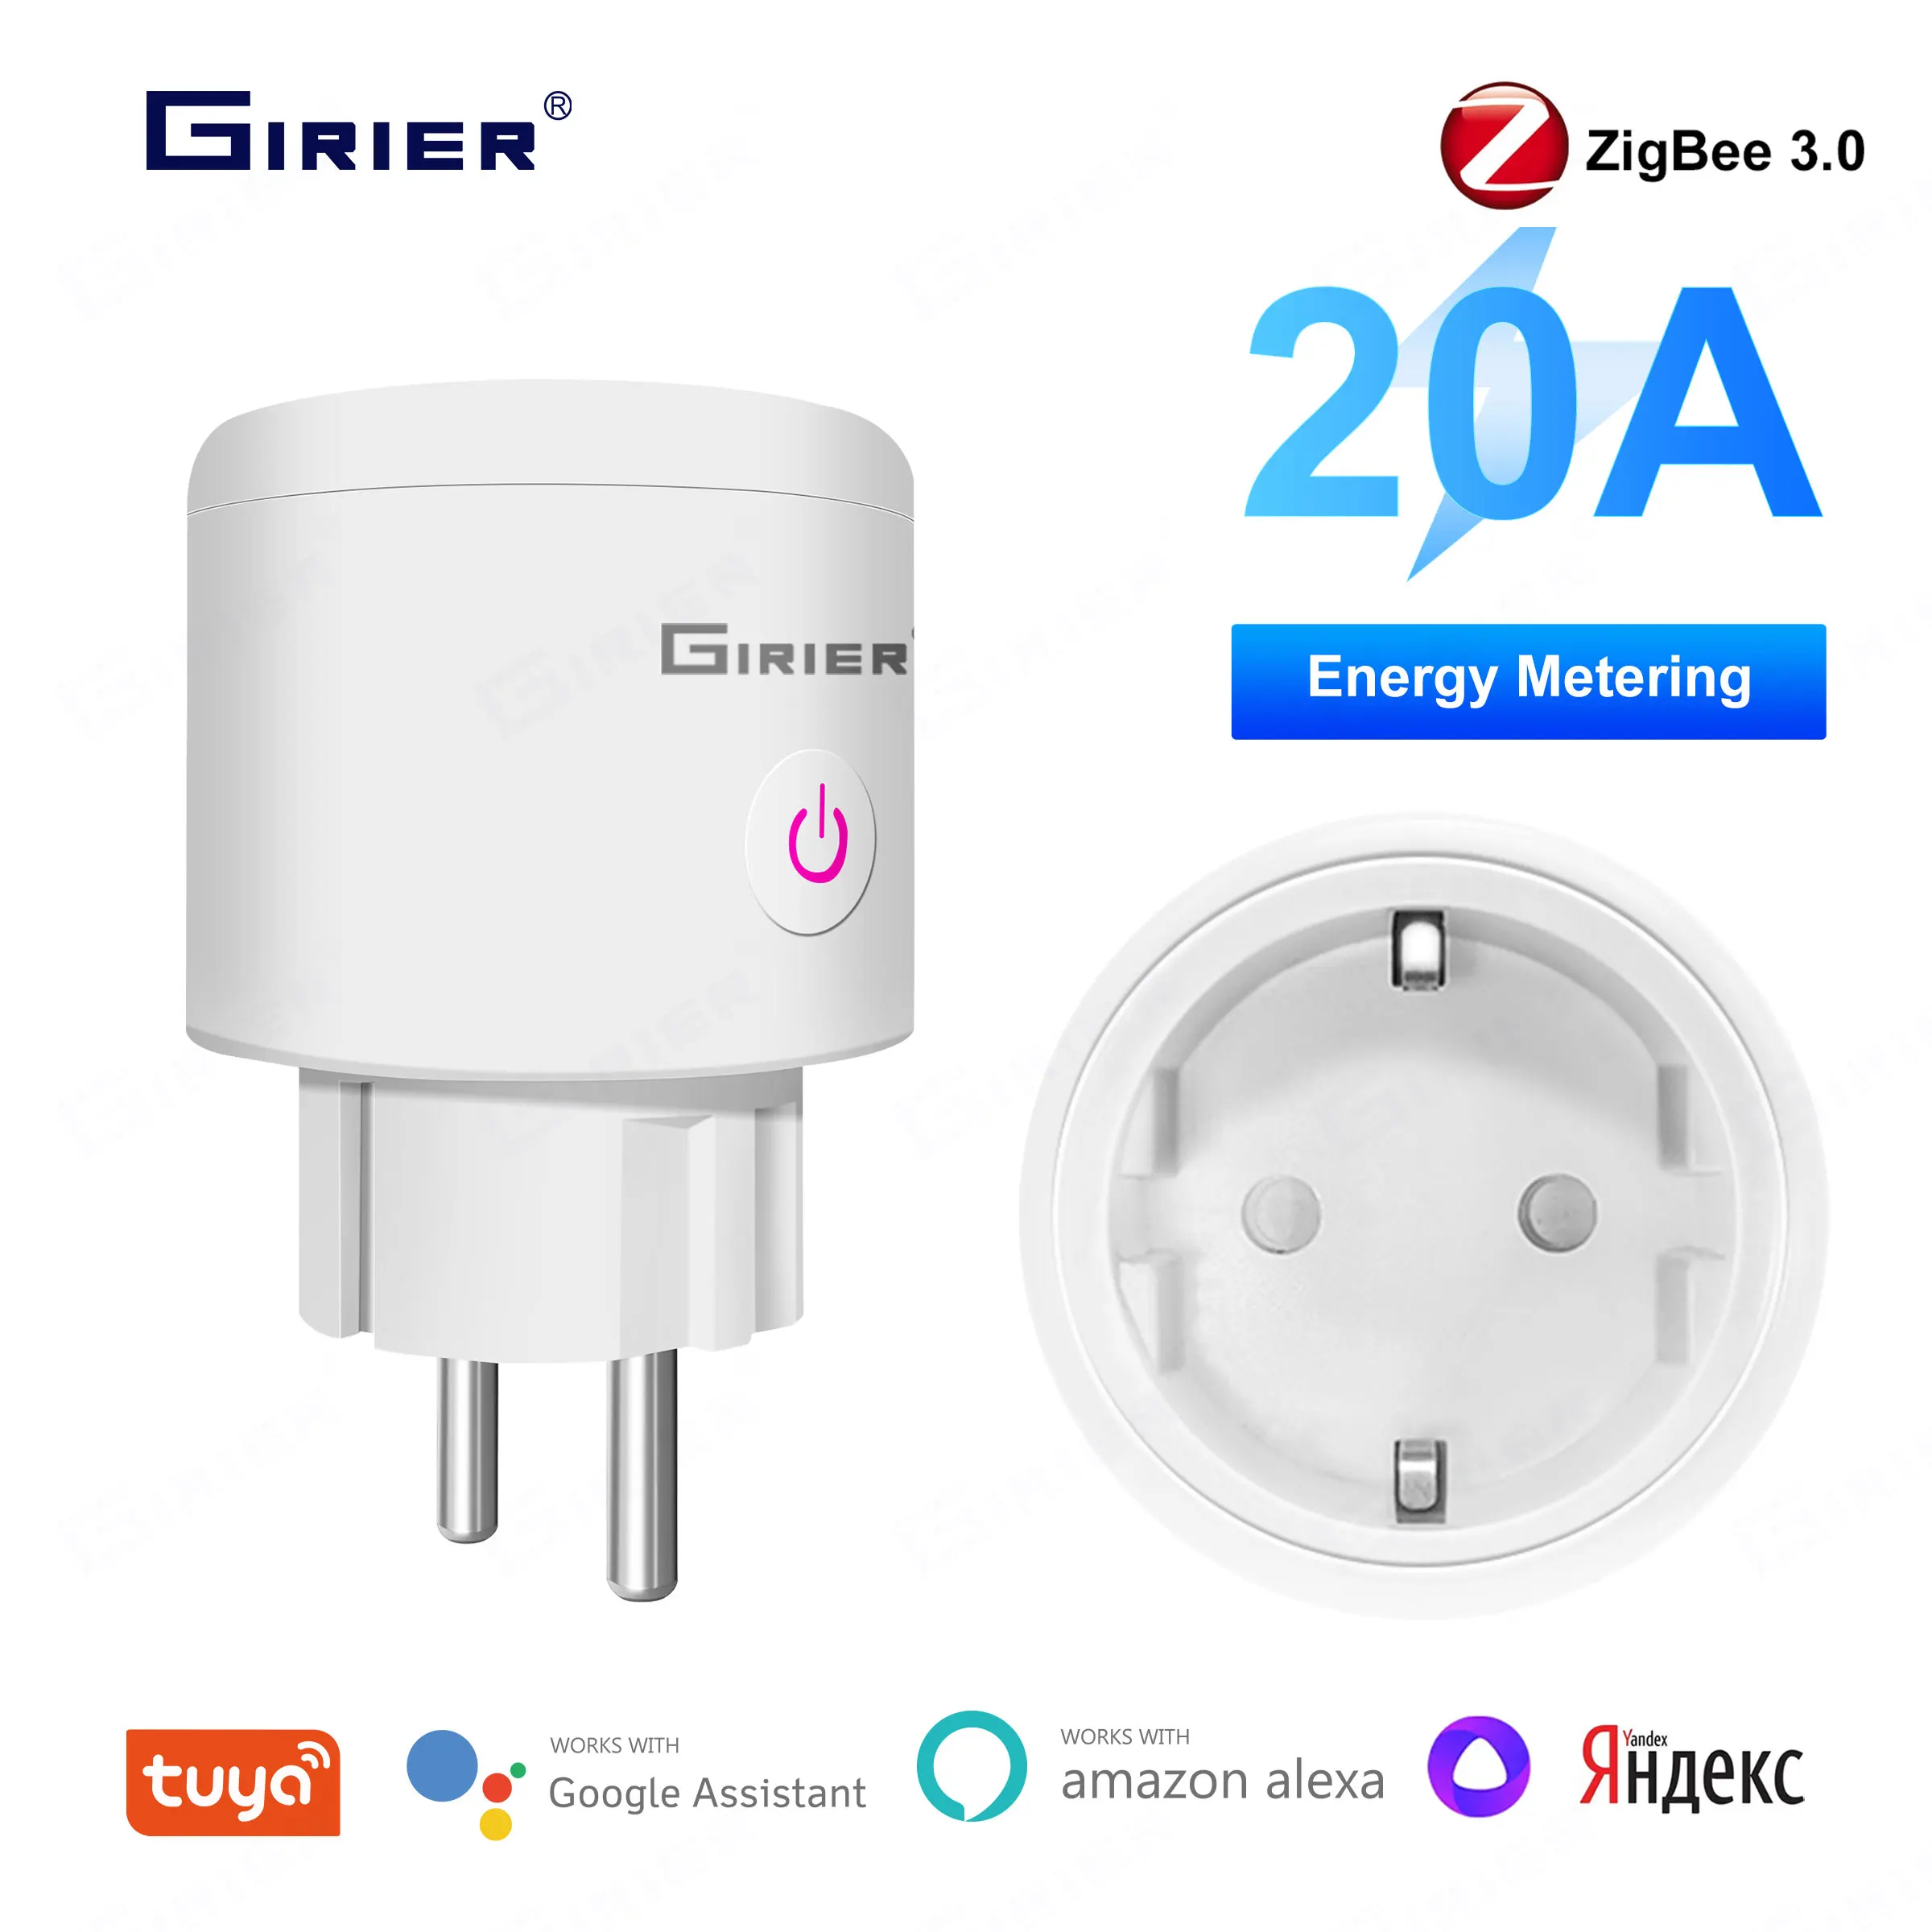 

GIRIER Tuya ZigBee Smart Plug 20A Smart Home Outlet Socket EU 4200W with Power Monitor Function Supports Alexa Alice Hey Google